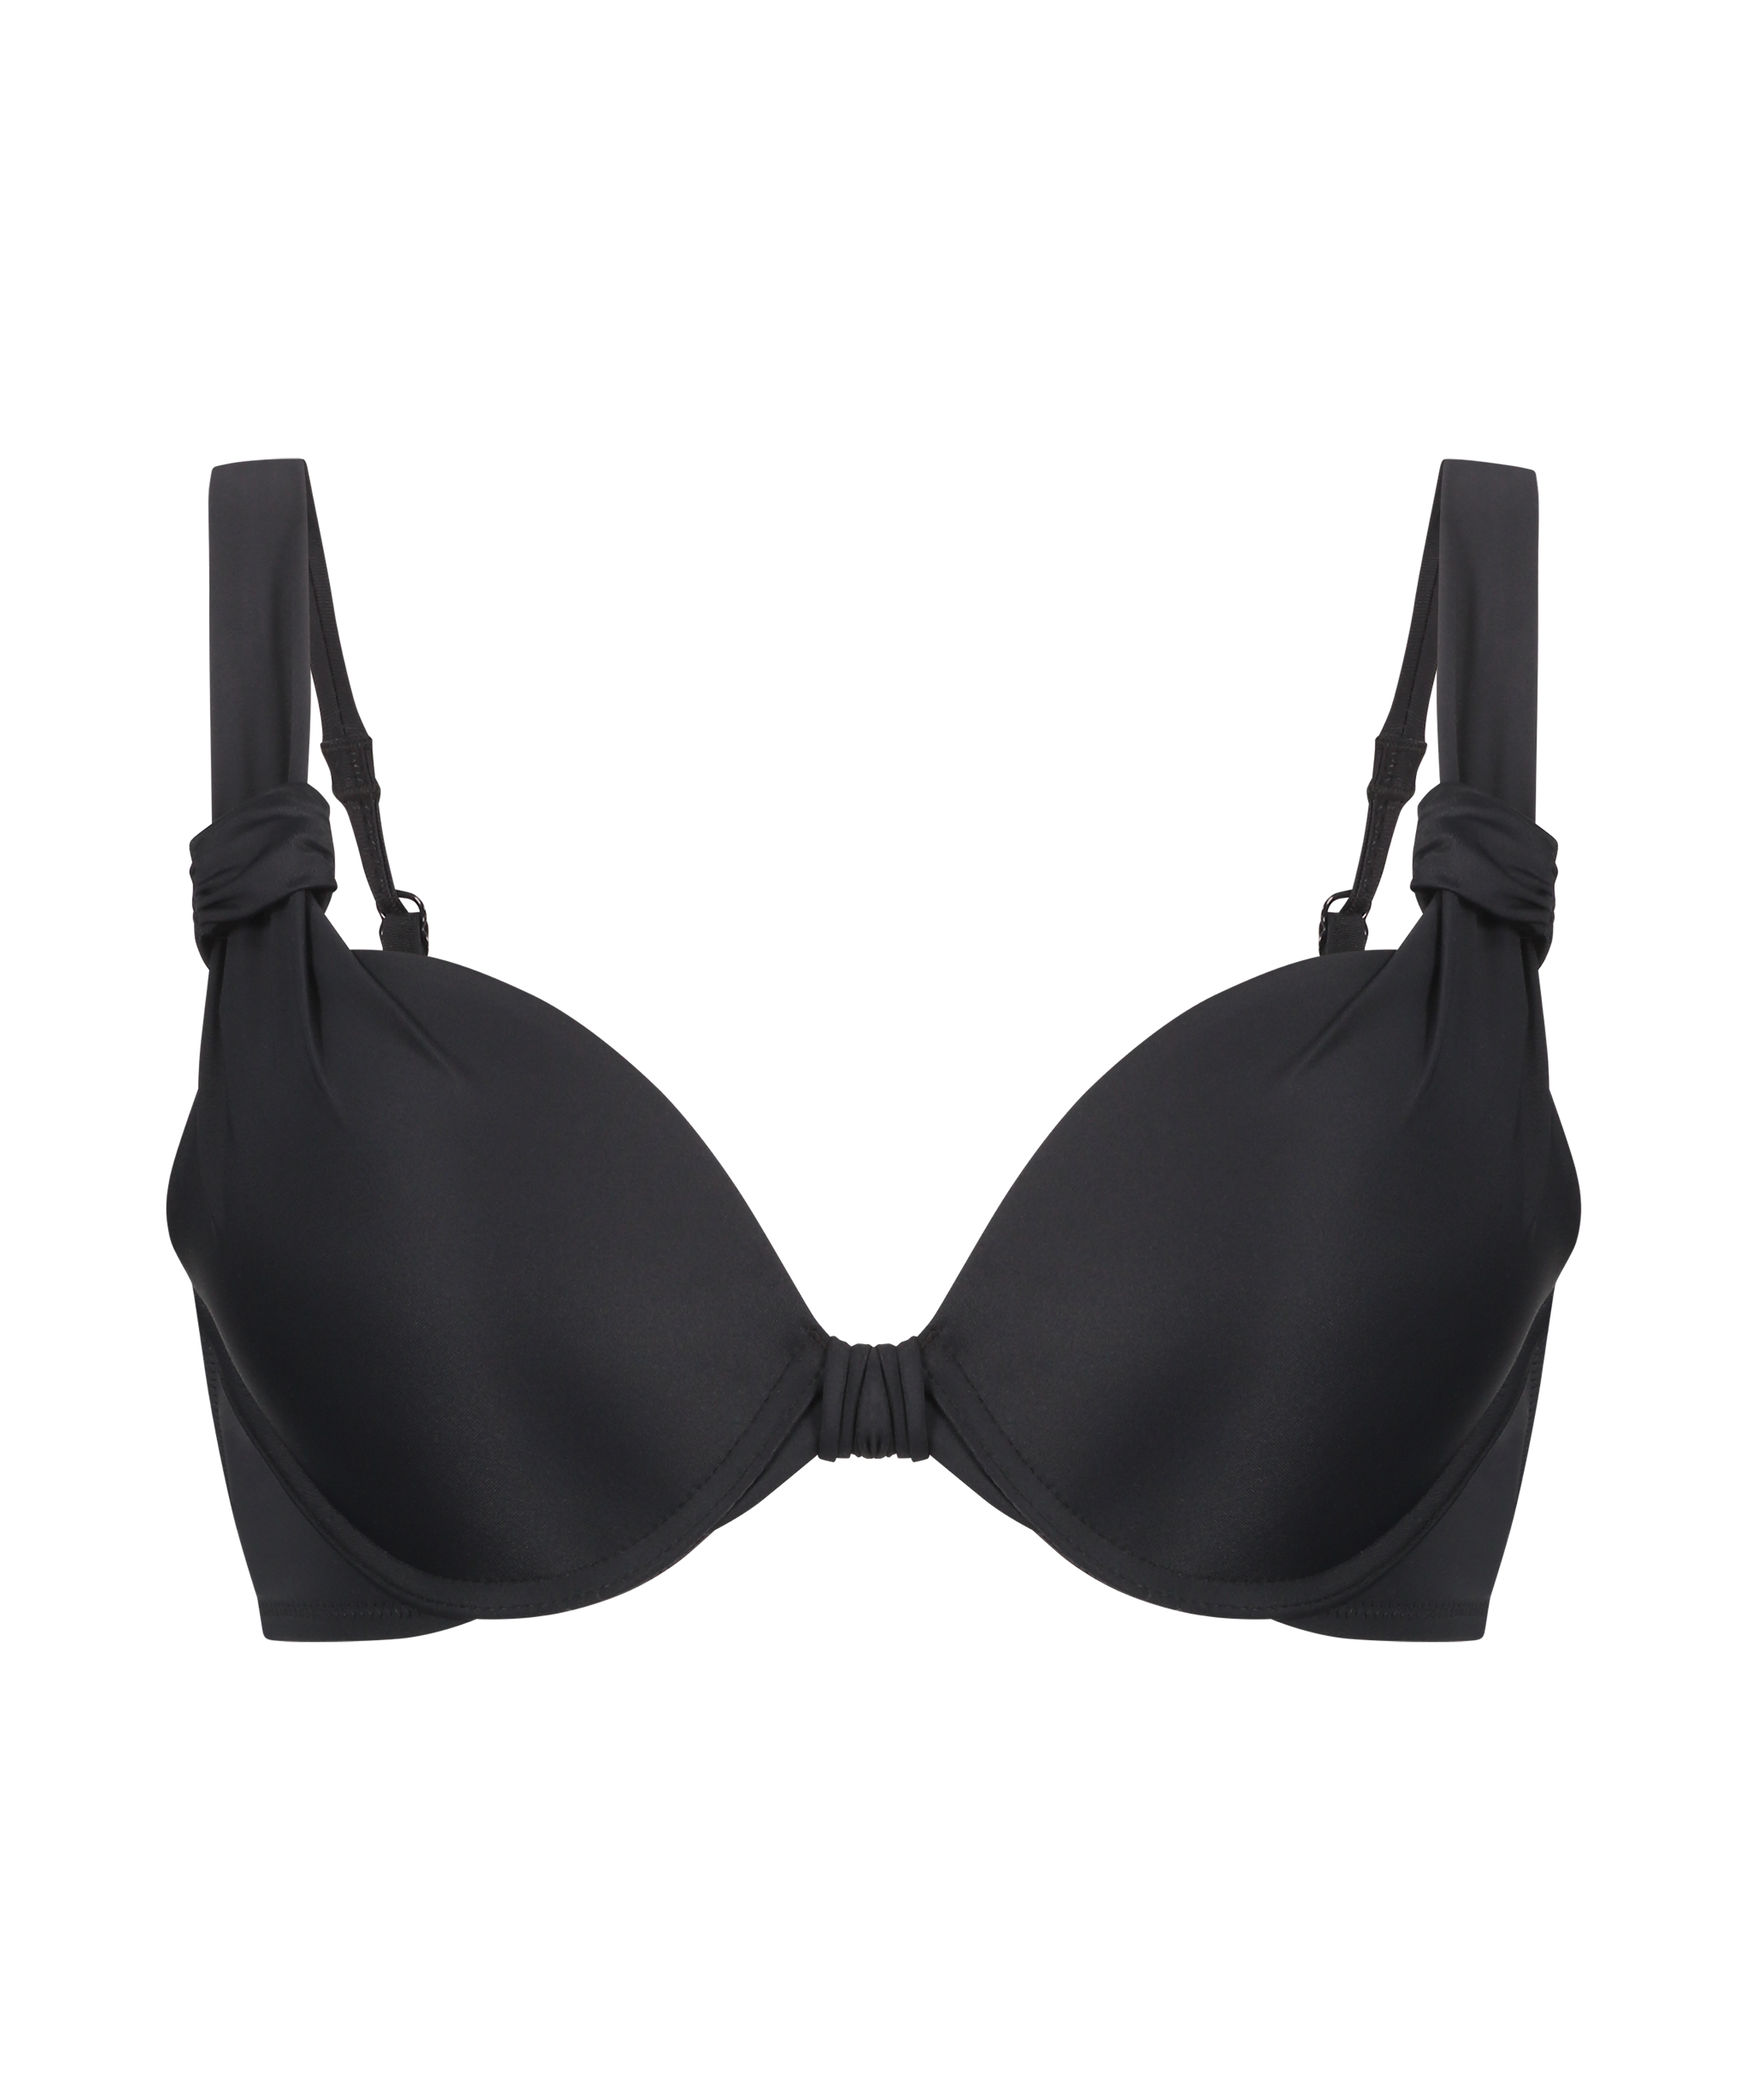 Padded underwired bikini top Luxe Cup E +, Black, main